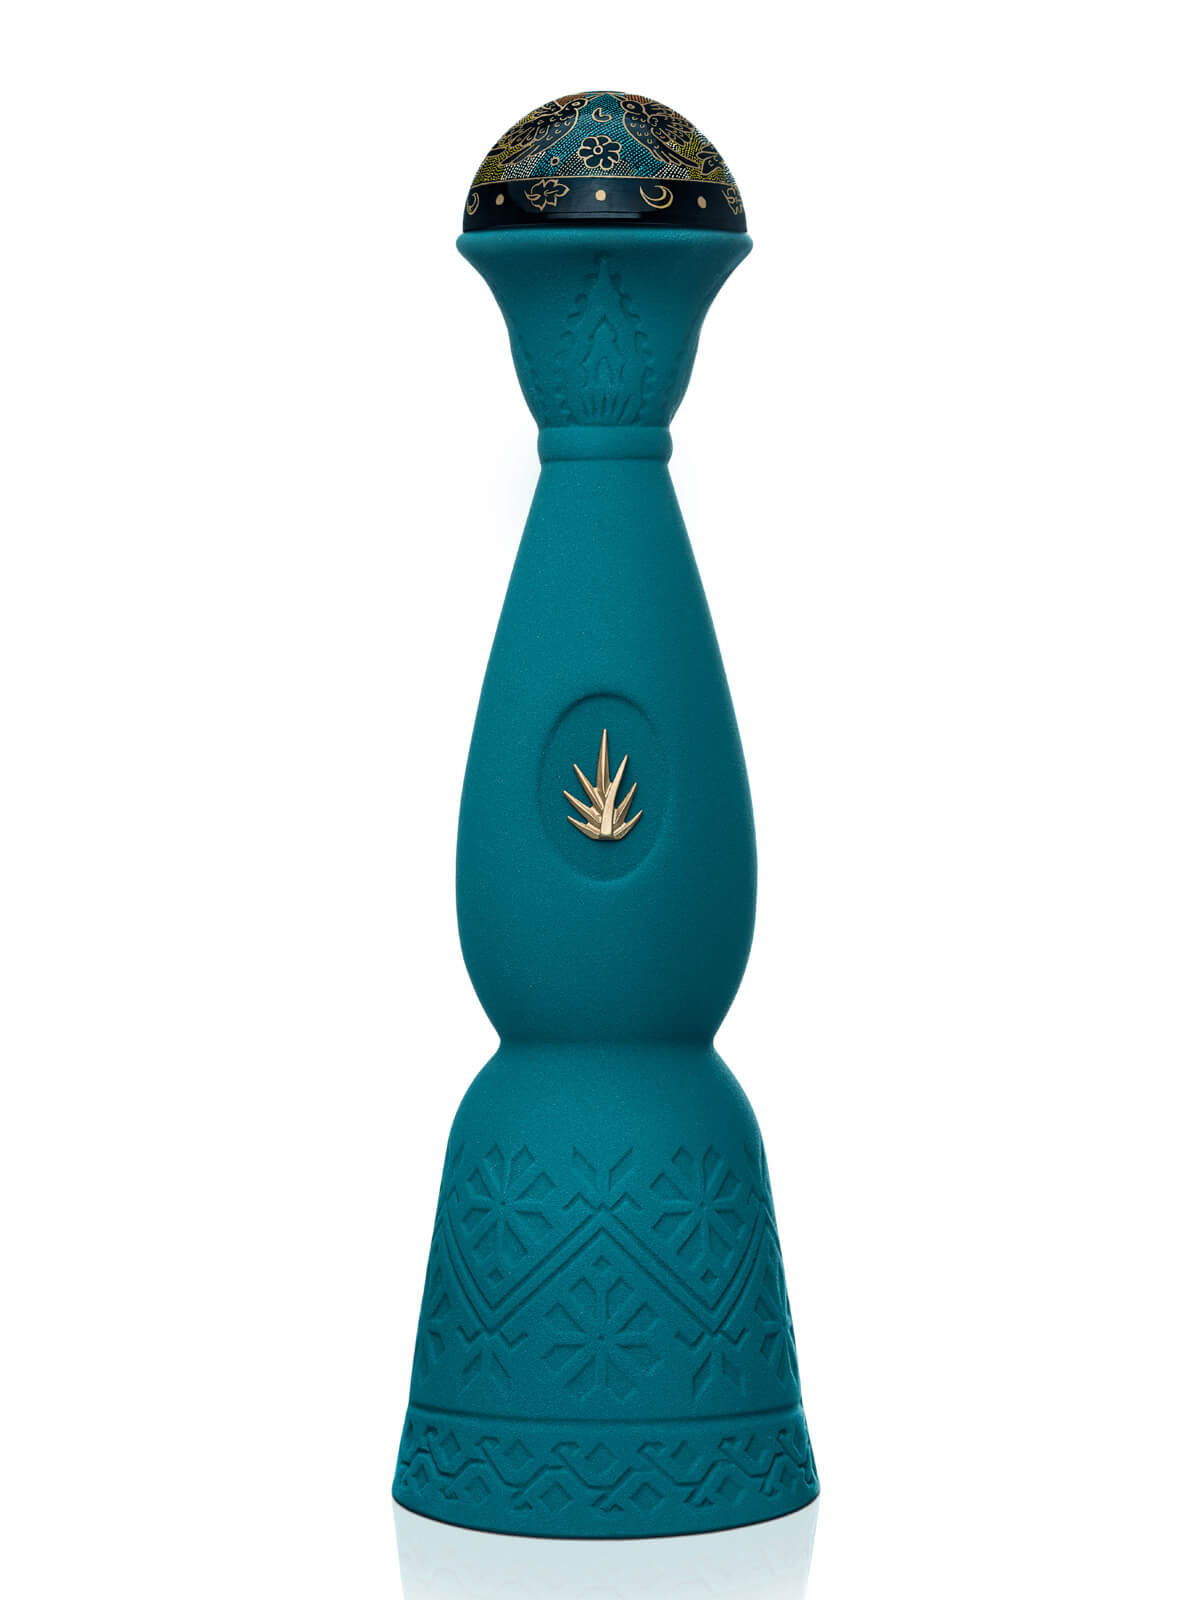 Clase Azul Mezcal Guerrero ceramic turquoise-colored bottle